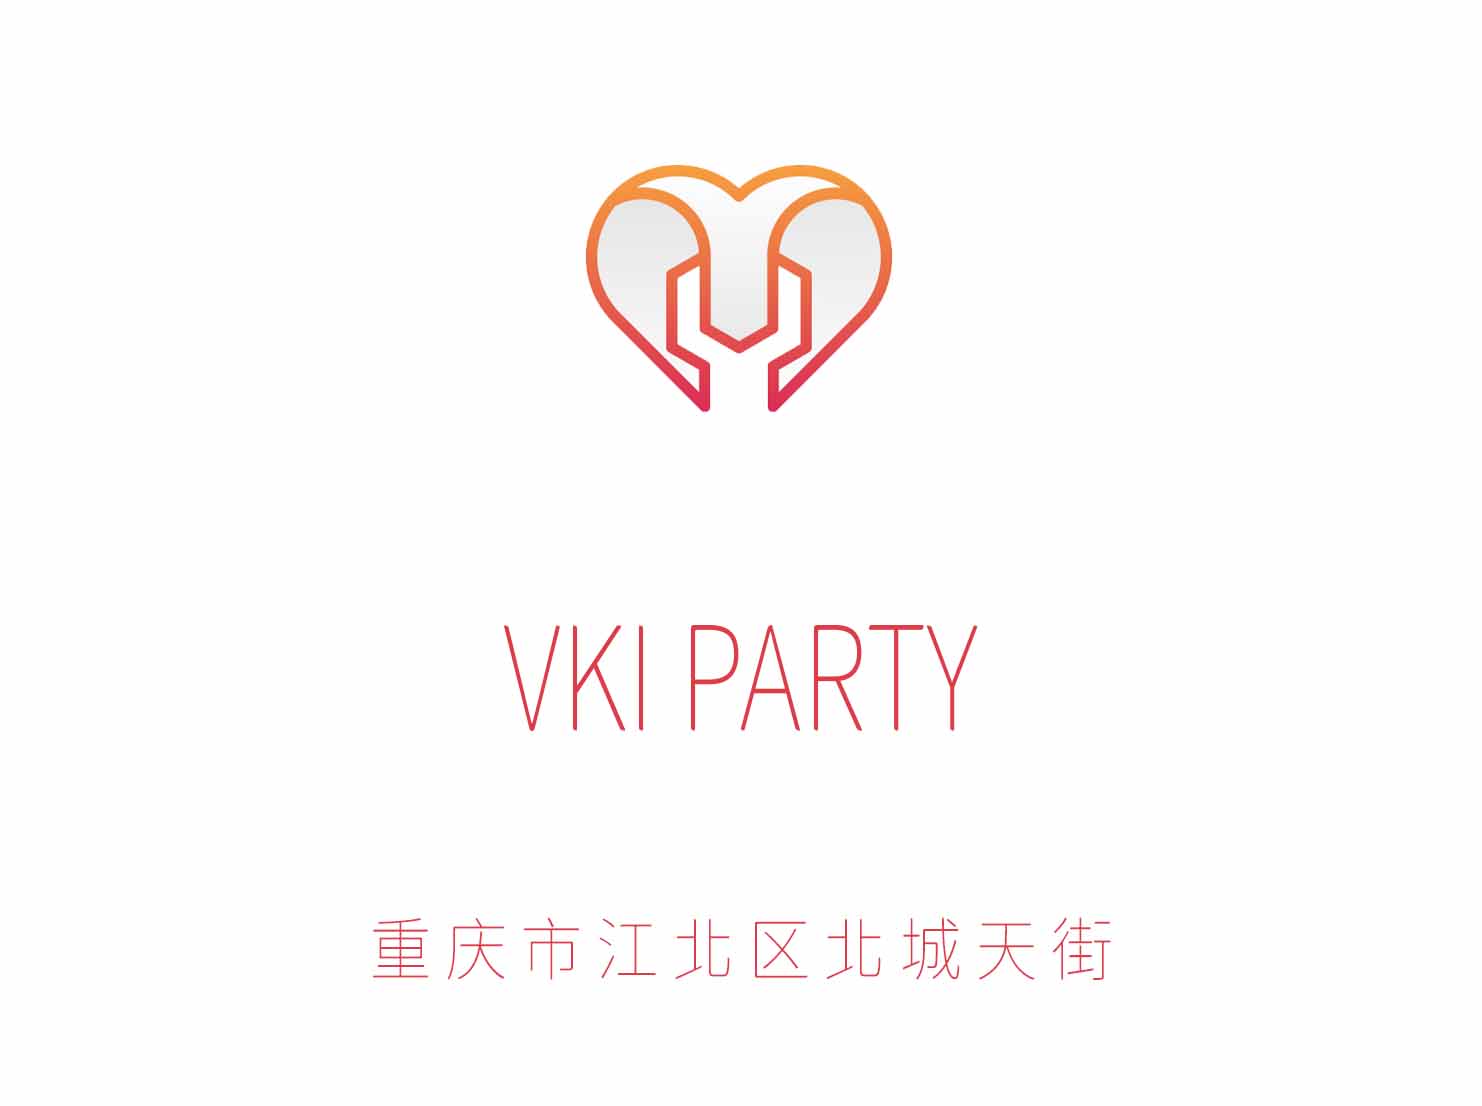 重庆VKI PARTY KTV